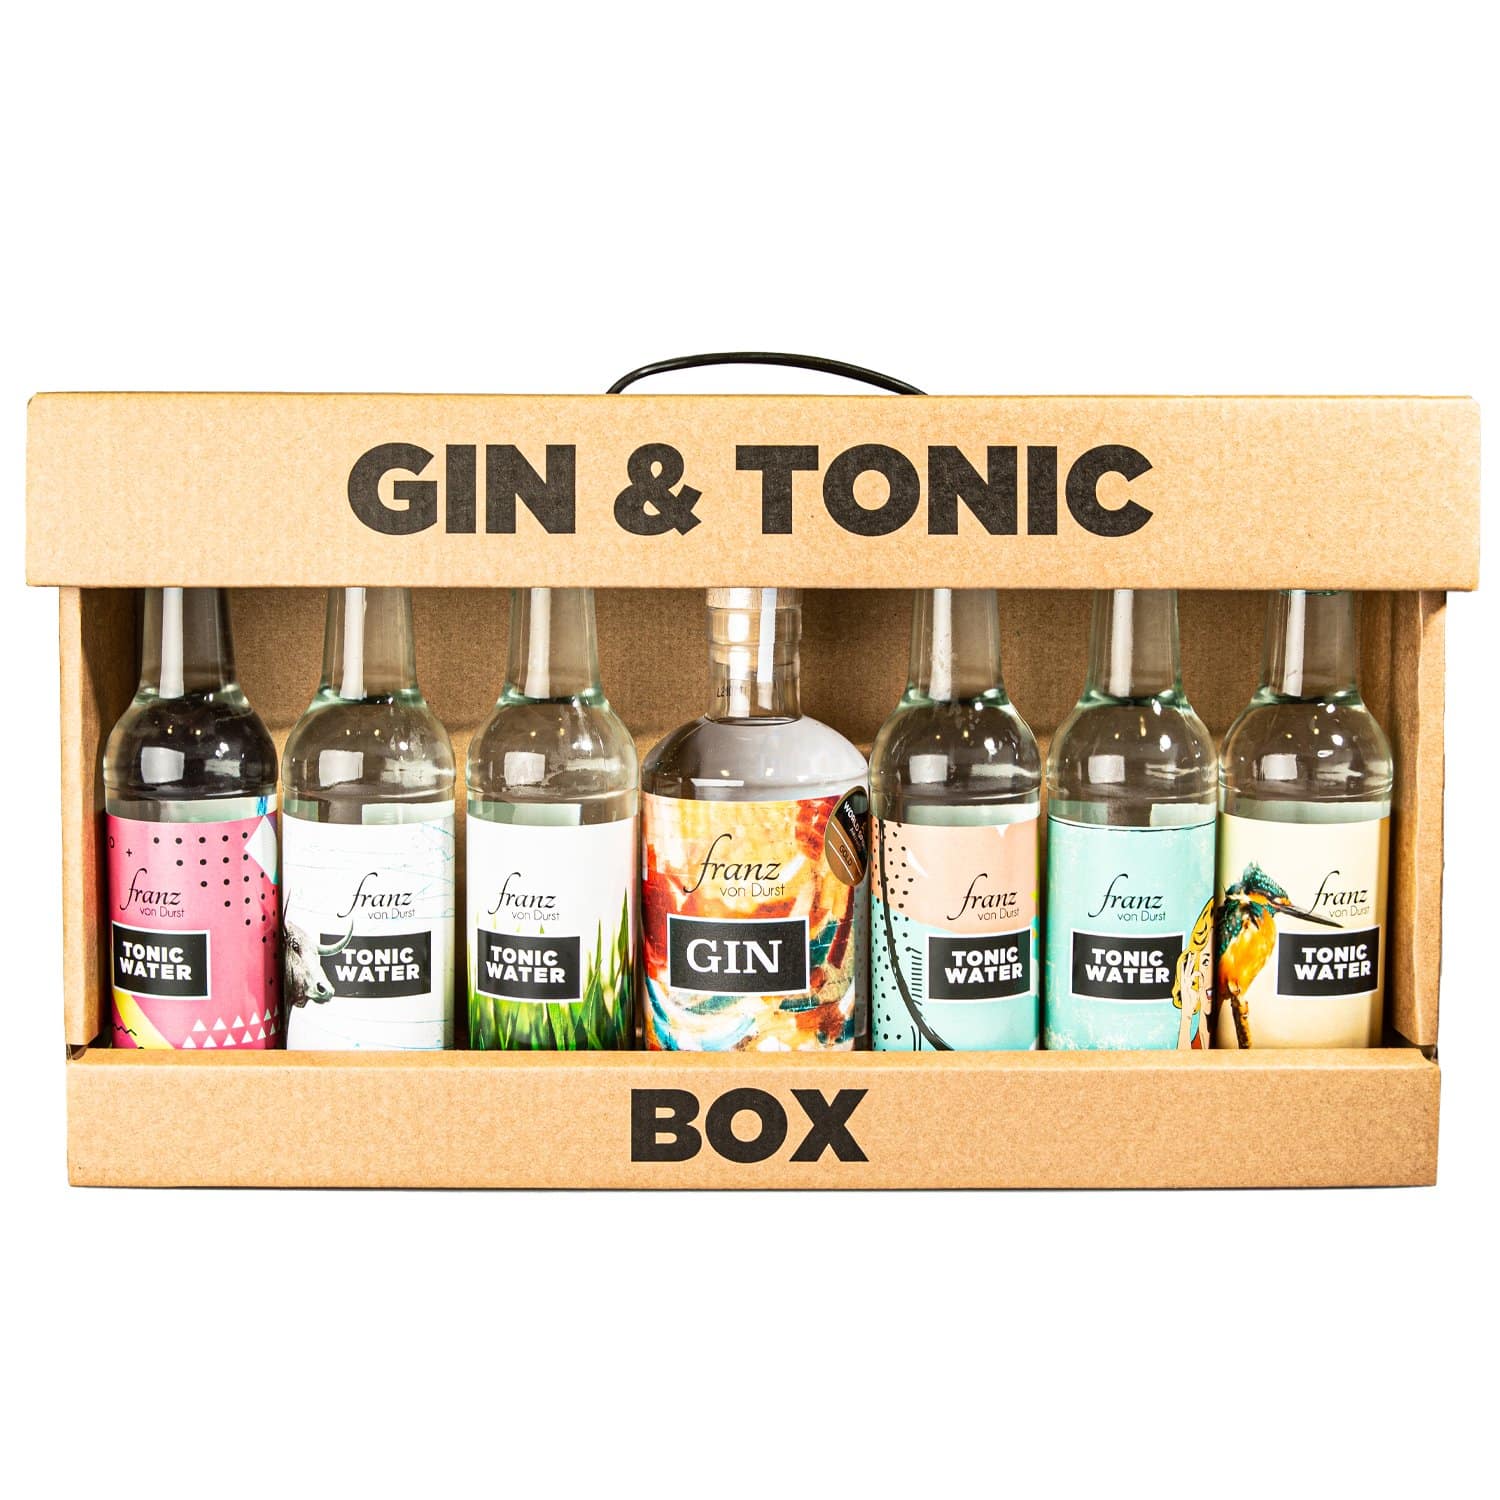 Gin & Tonic Box